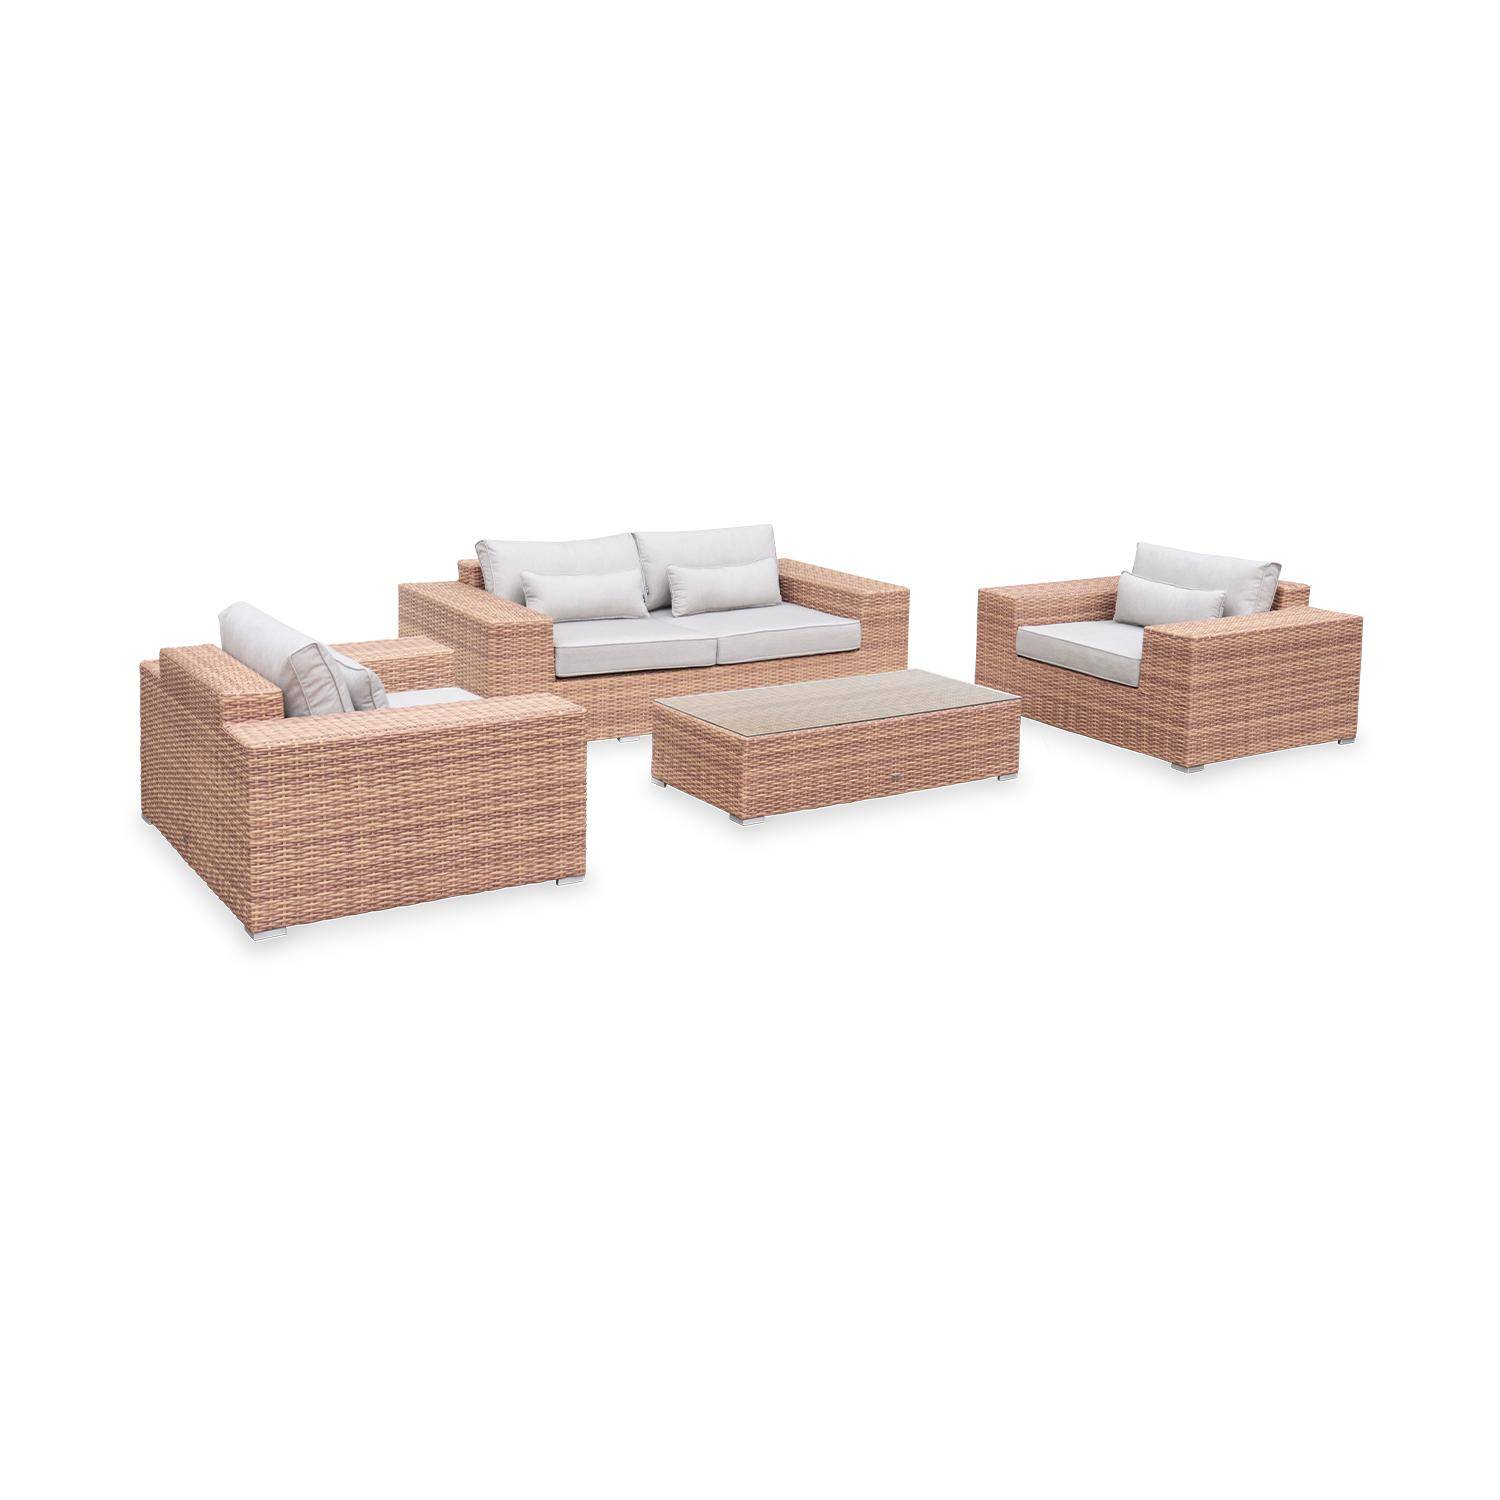 Extra-large 4-seater polyrattan garden sofa set - Sofa, 2 Armchairs, Coffee table - Gubbio - Beige,sweeek,Photo1